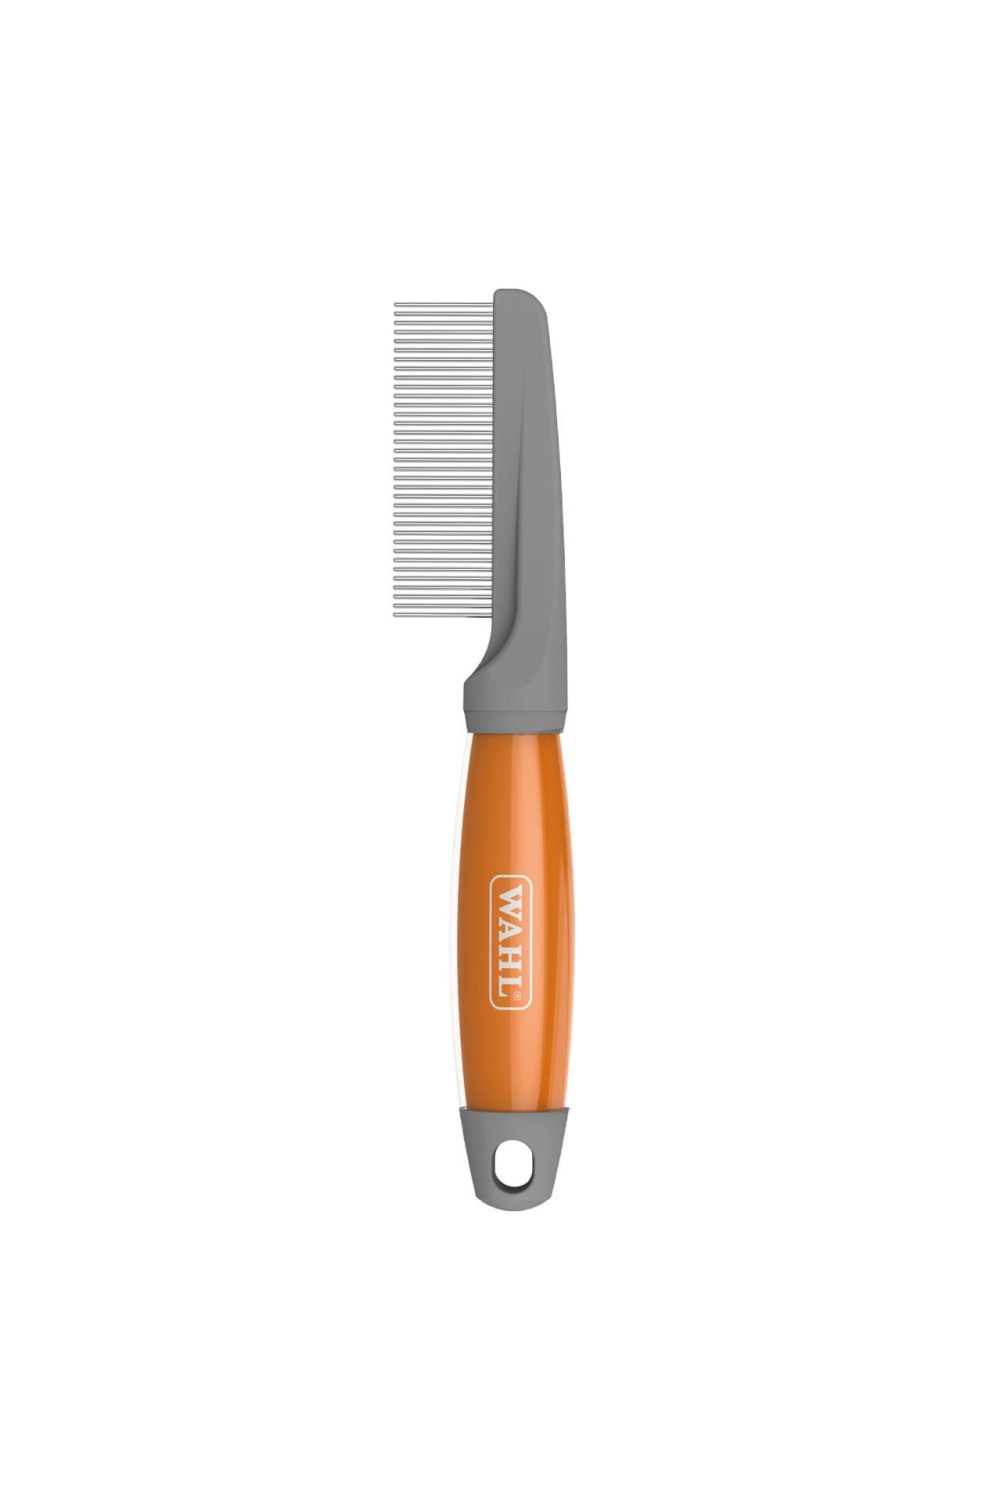 Wahl Gel Handle Grooming Comb (Gray/Orange) (One Size)